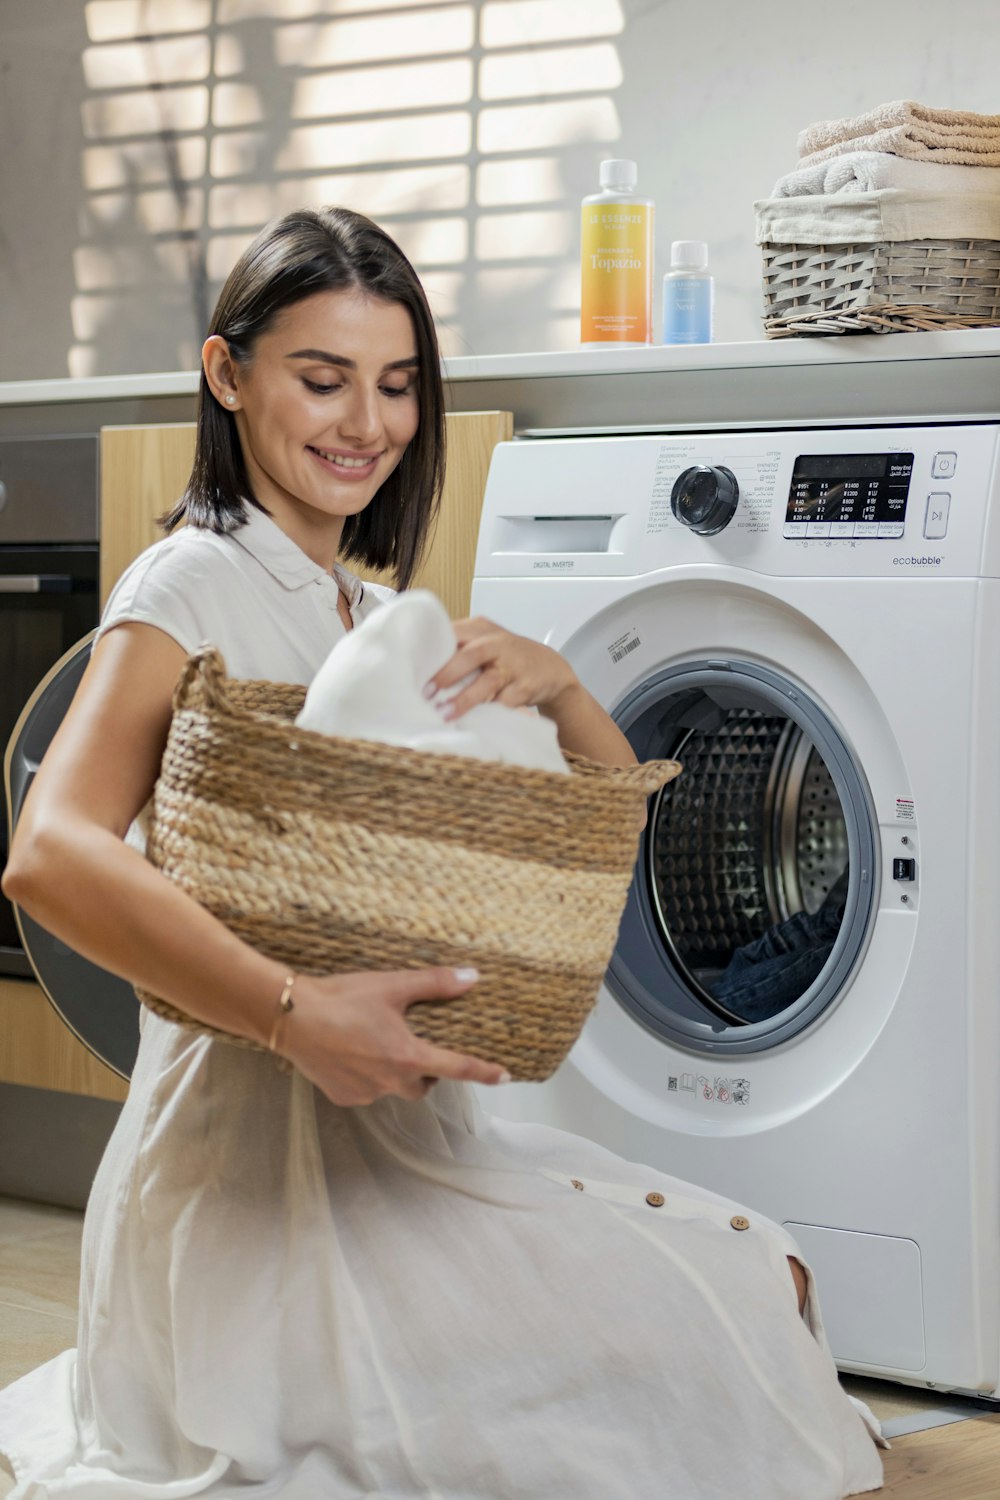 a woman is holding a basket near a washing machine